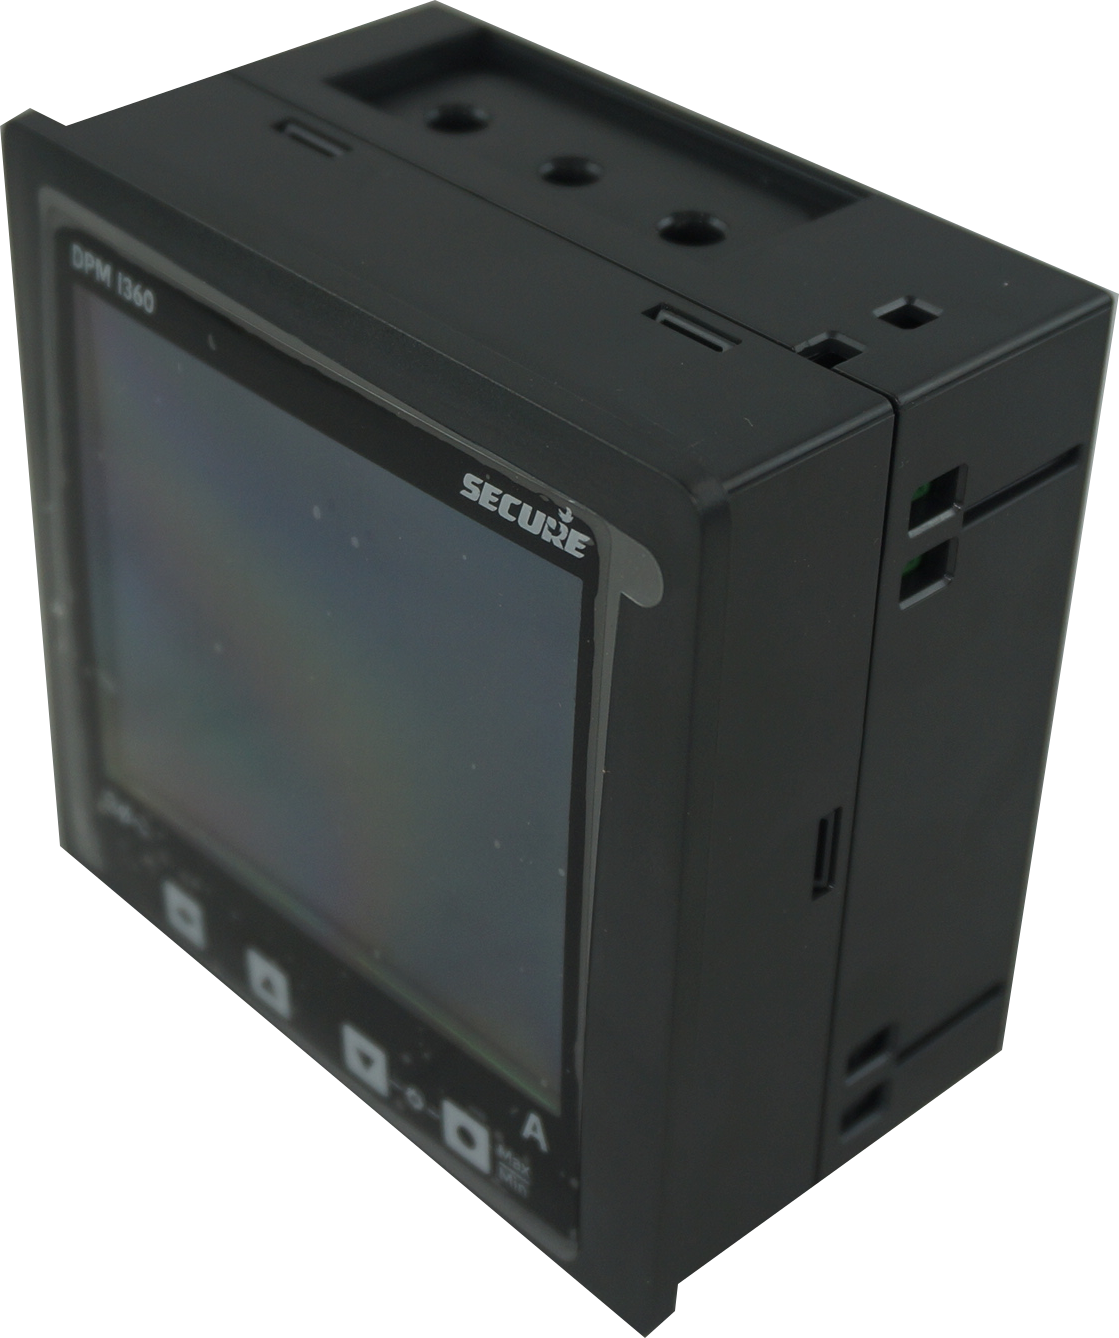 DPM96V360-2, 96mm x 96mm LCD Digital Voltmeter, 3 Phase 0-500VAC Input, 0.5% Accuracy, 40 to 300VAC/DC Supply, IP54 (Optional IP65)